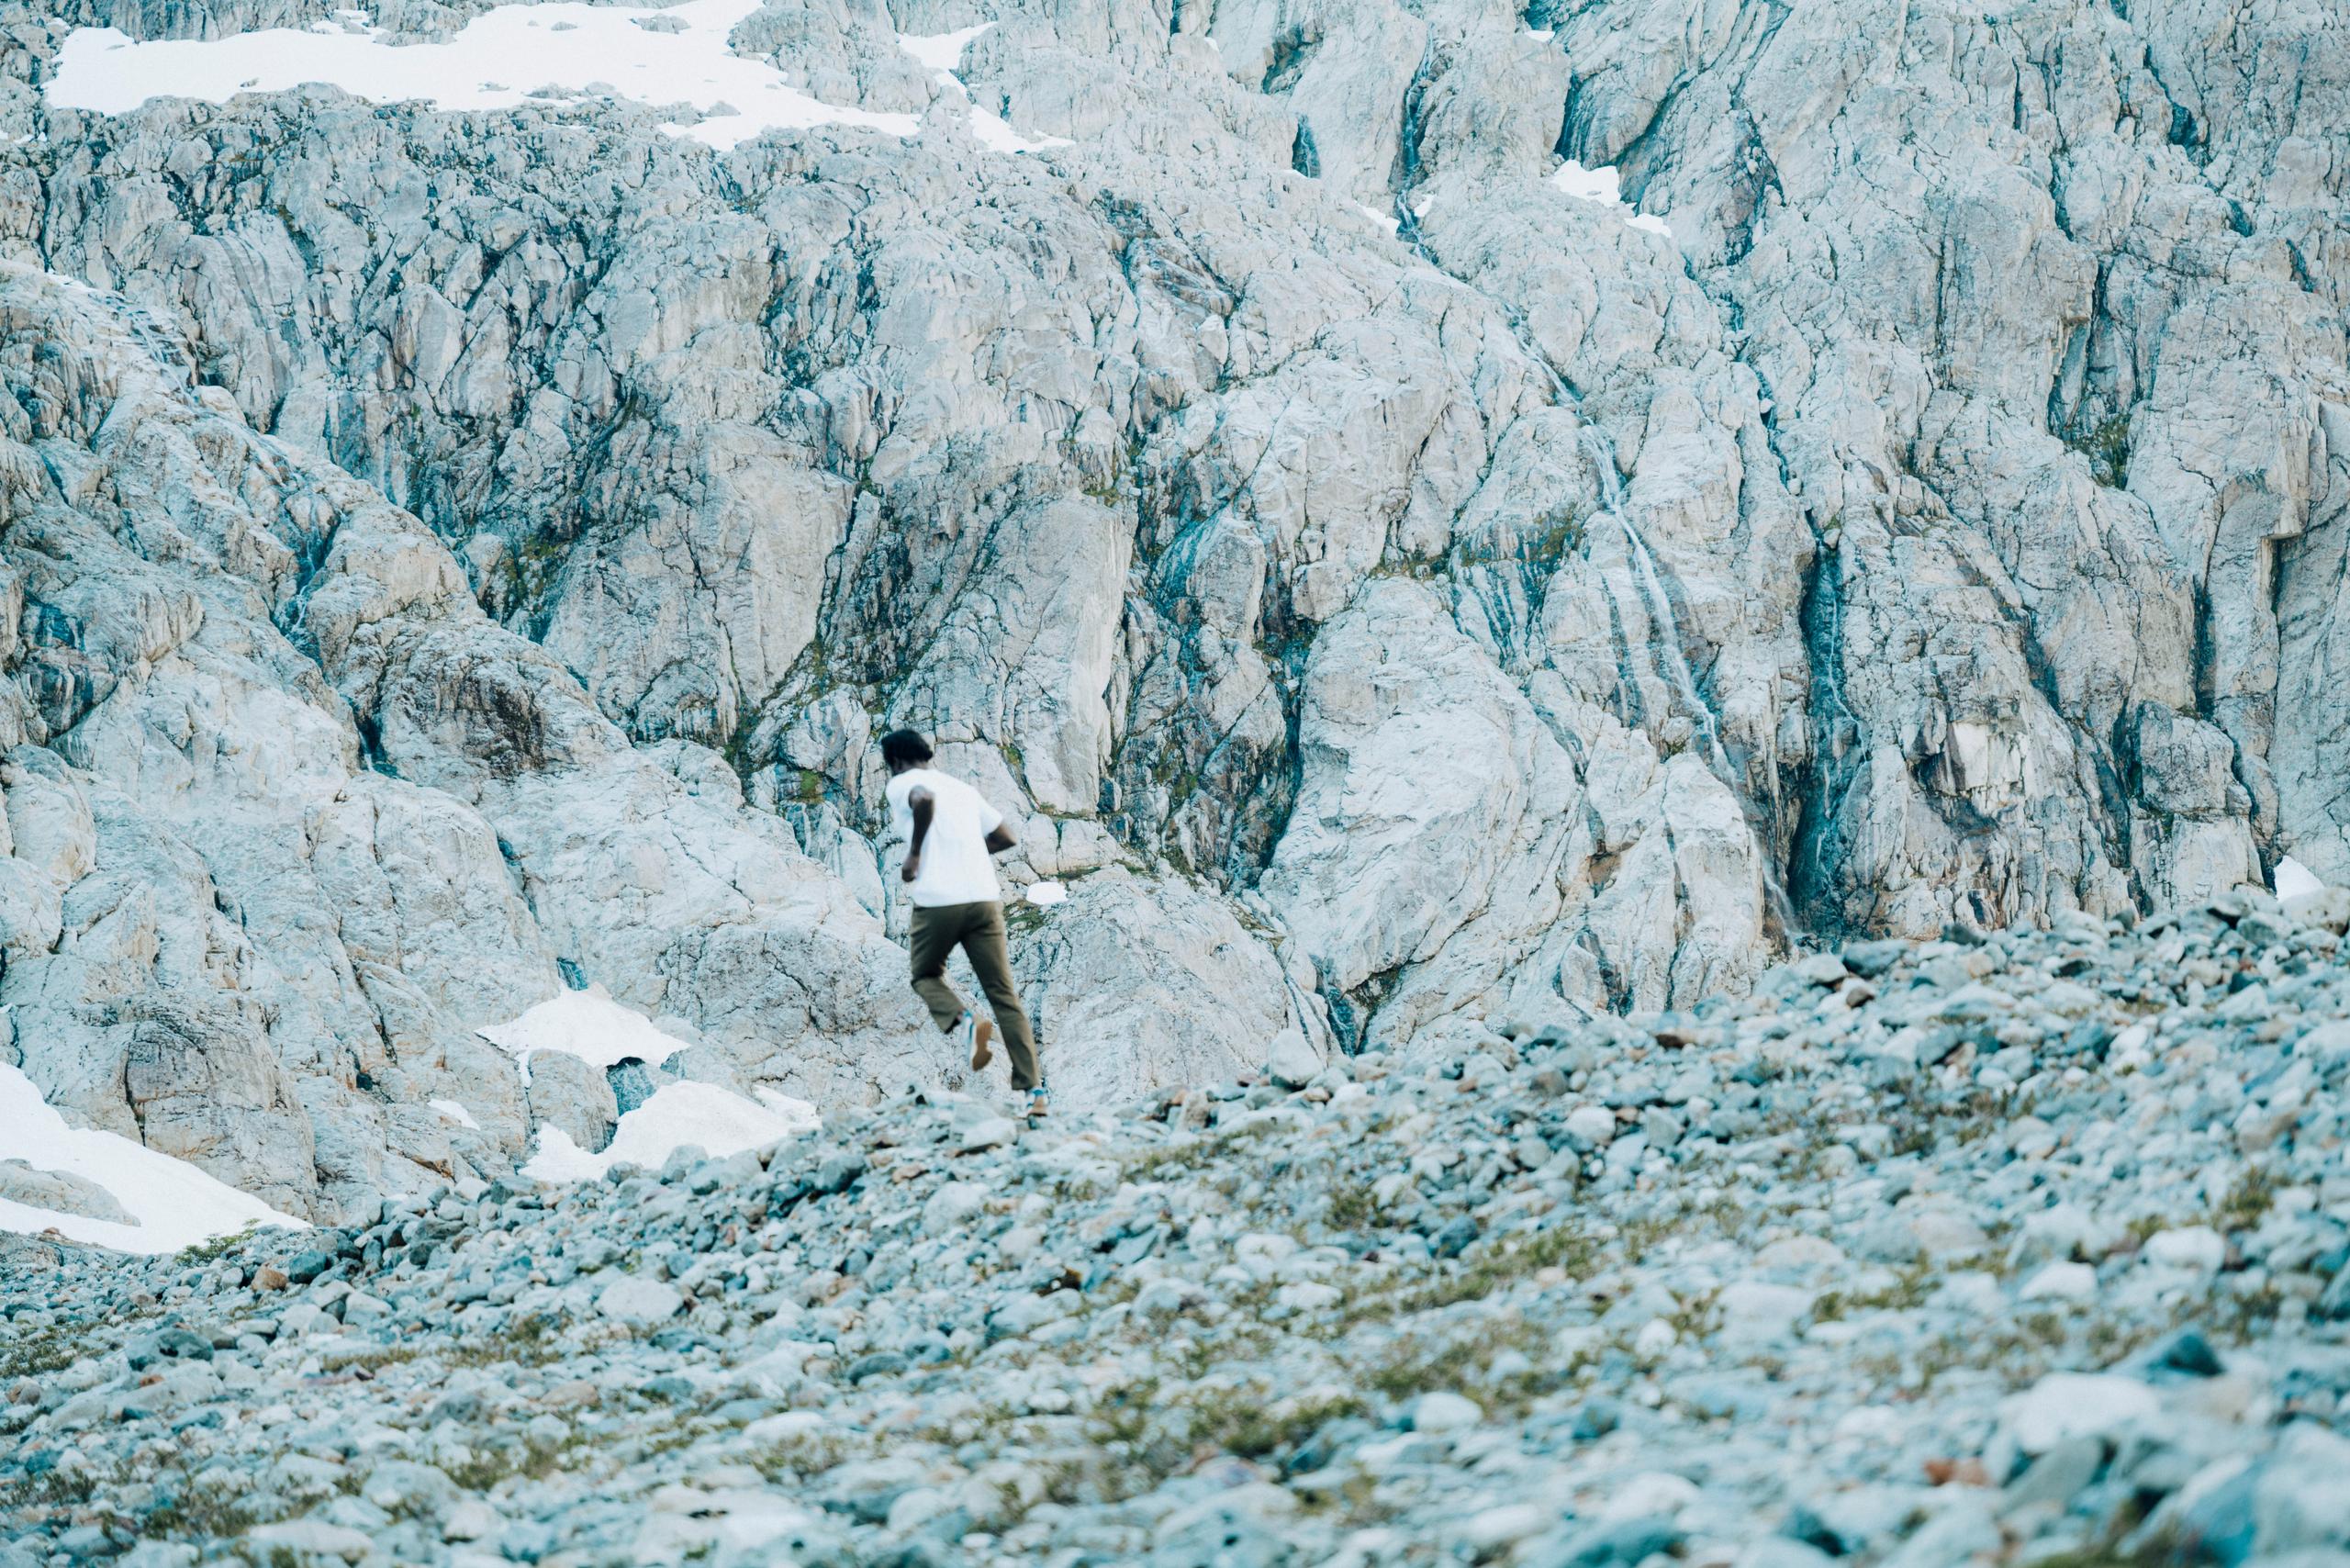  A man running on rocky ground